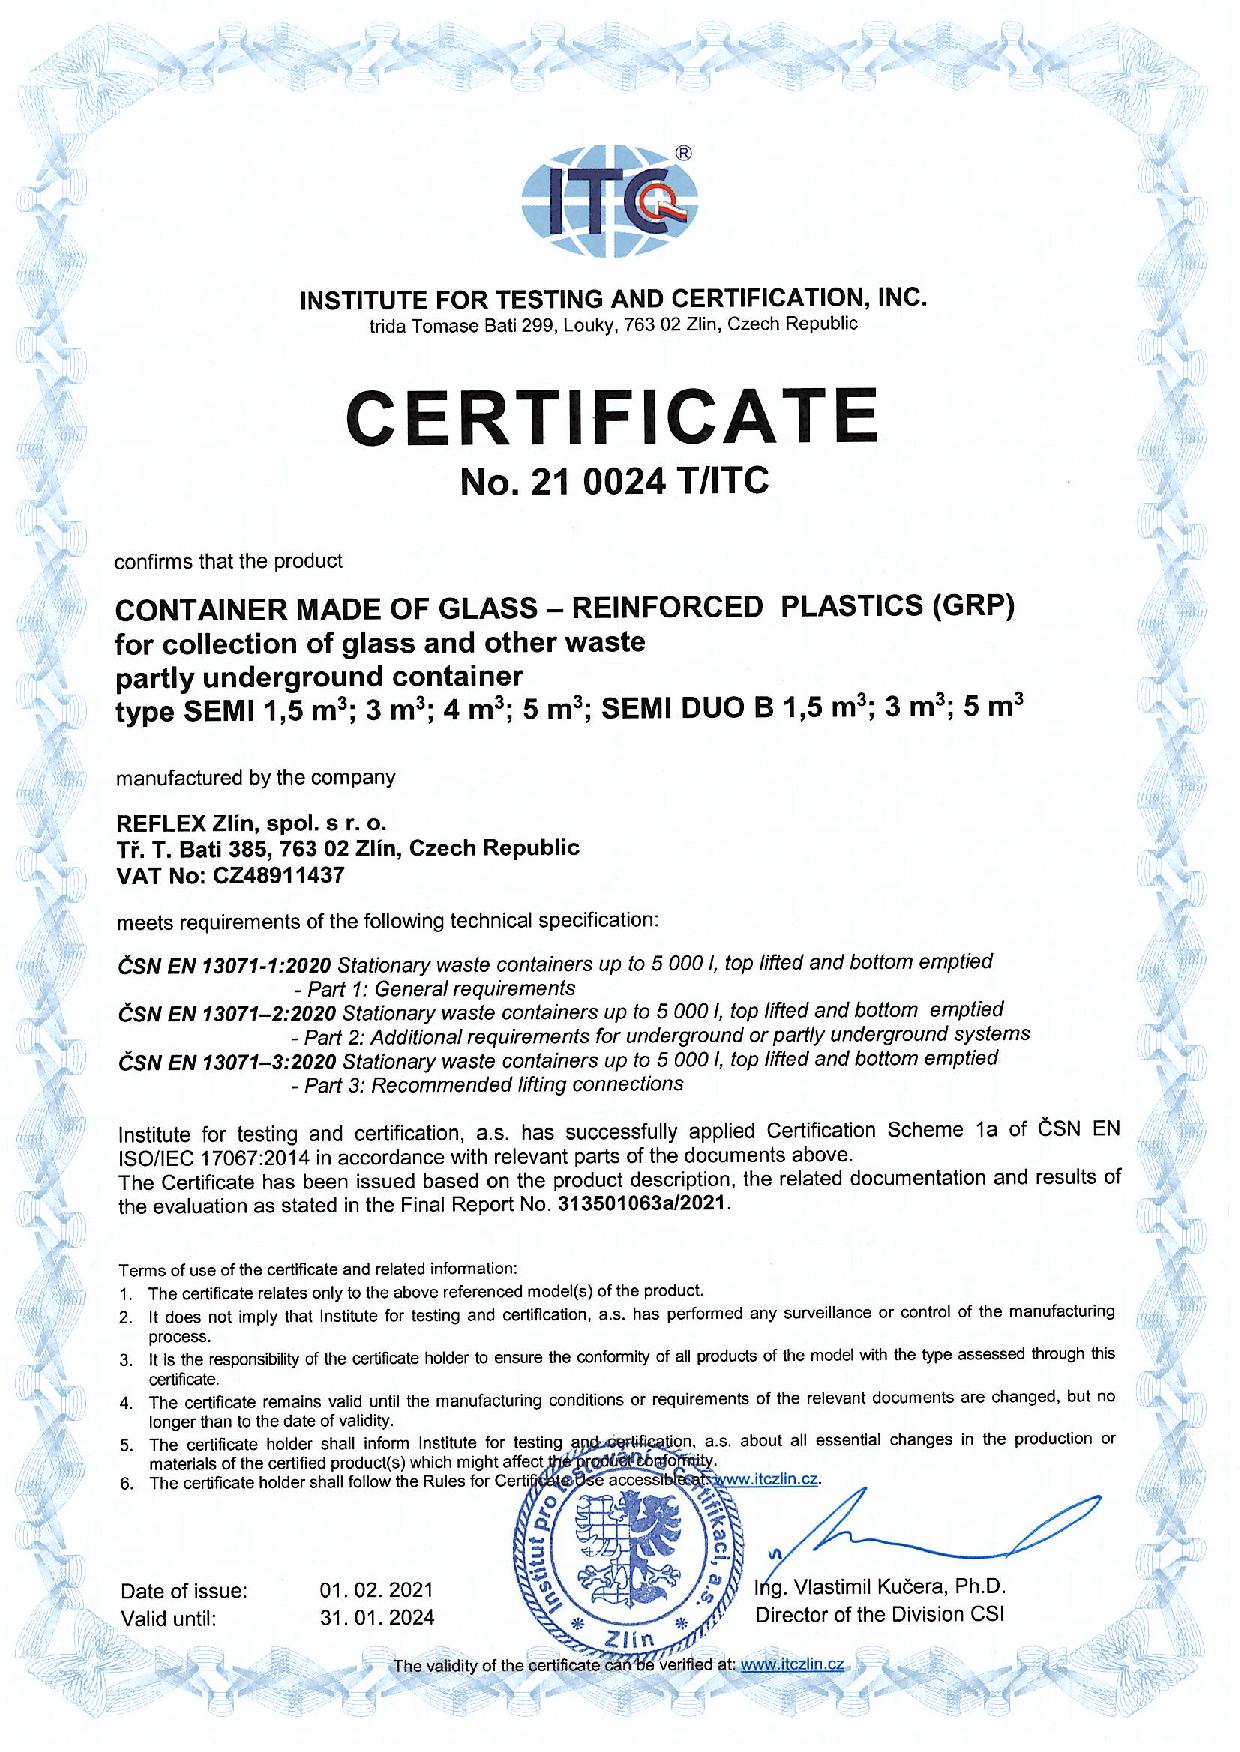 reflex-certificates